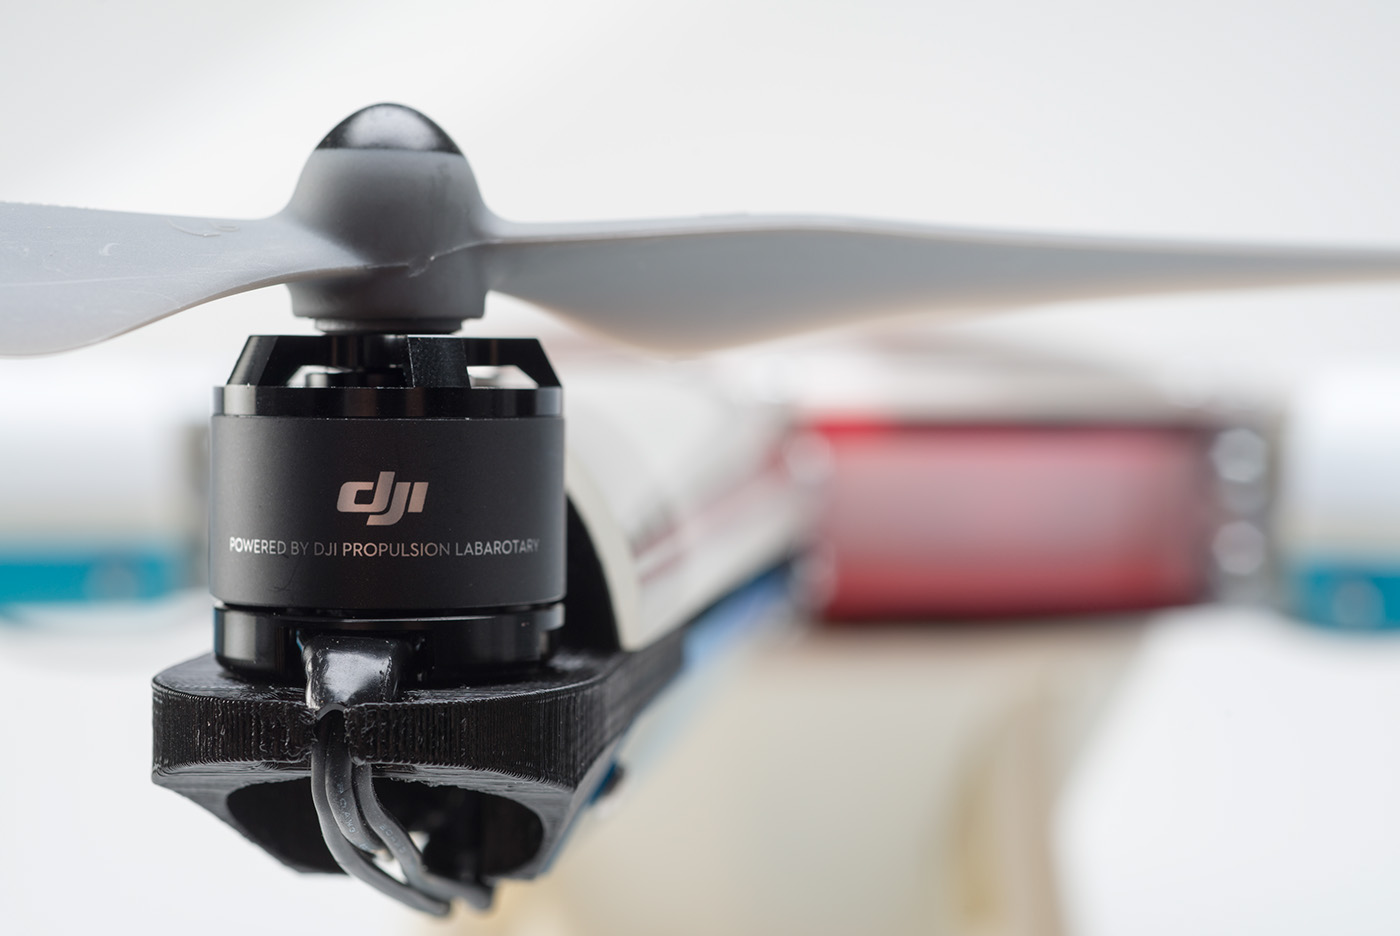 hexacopter quadcopter drone Fly plane DJI Motor prototype model making Model Making